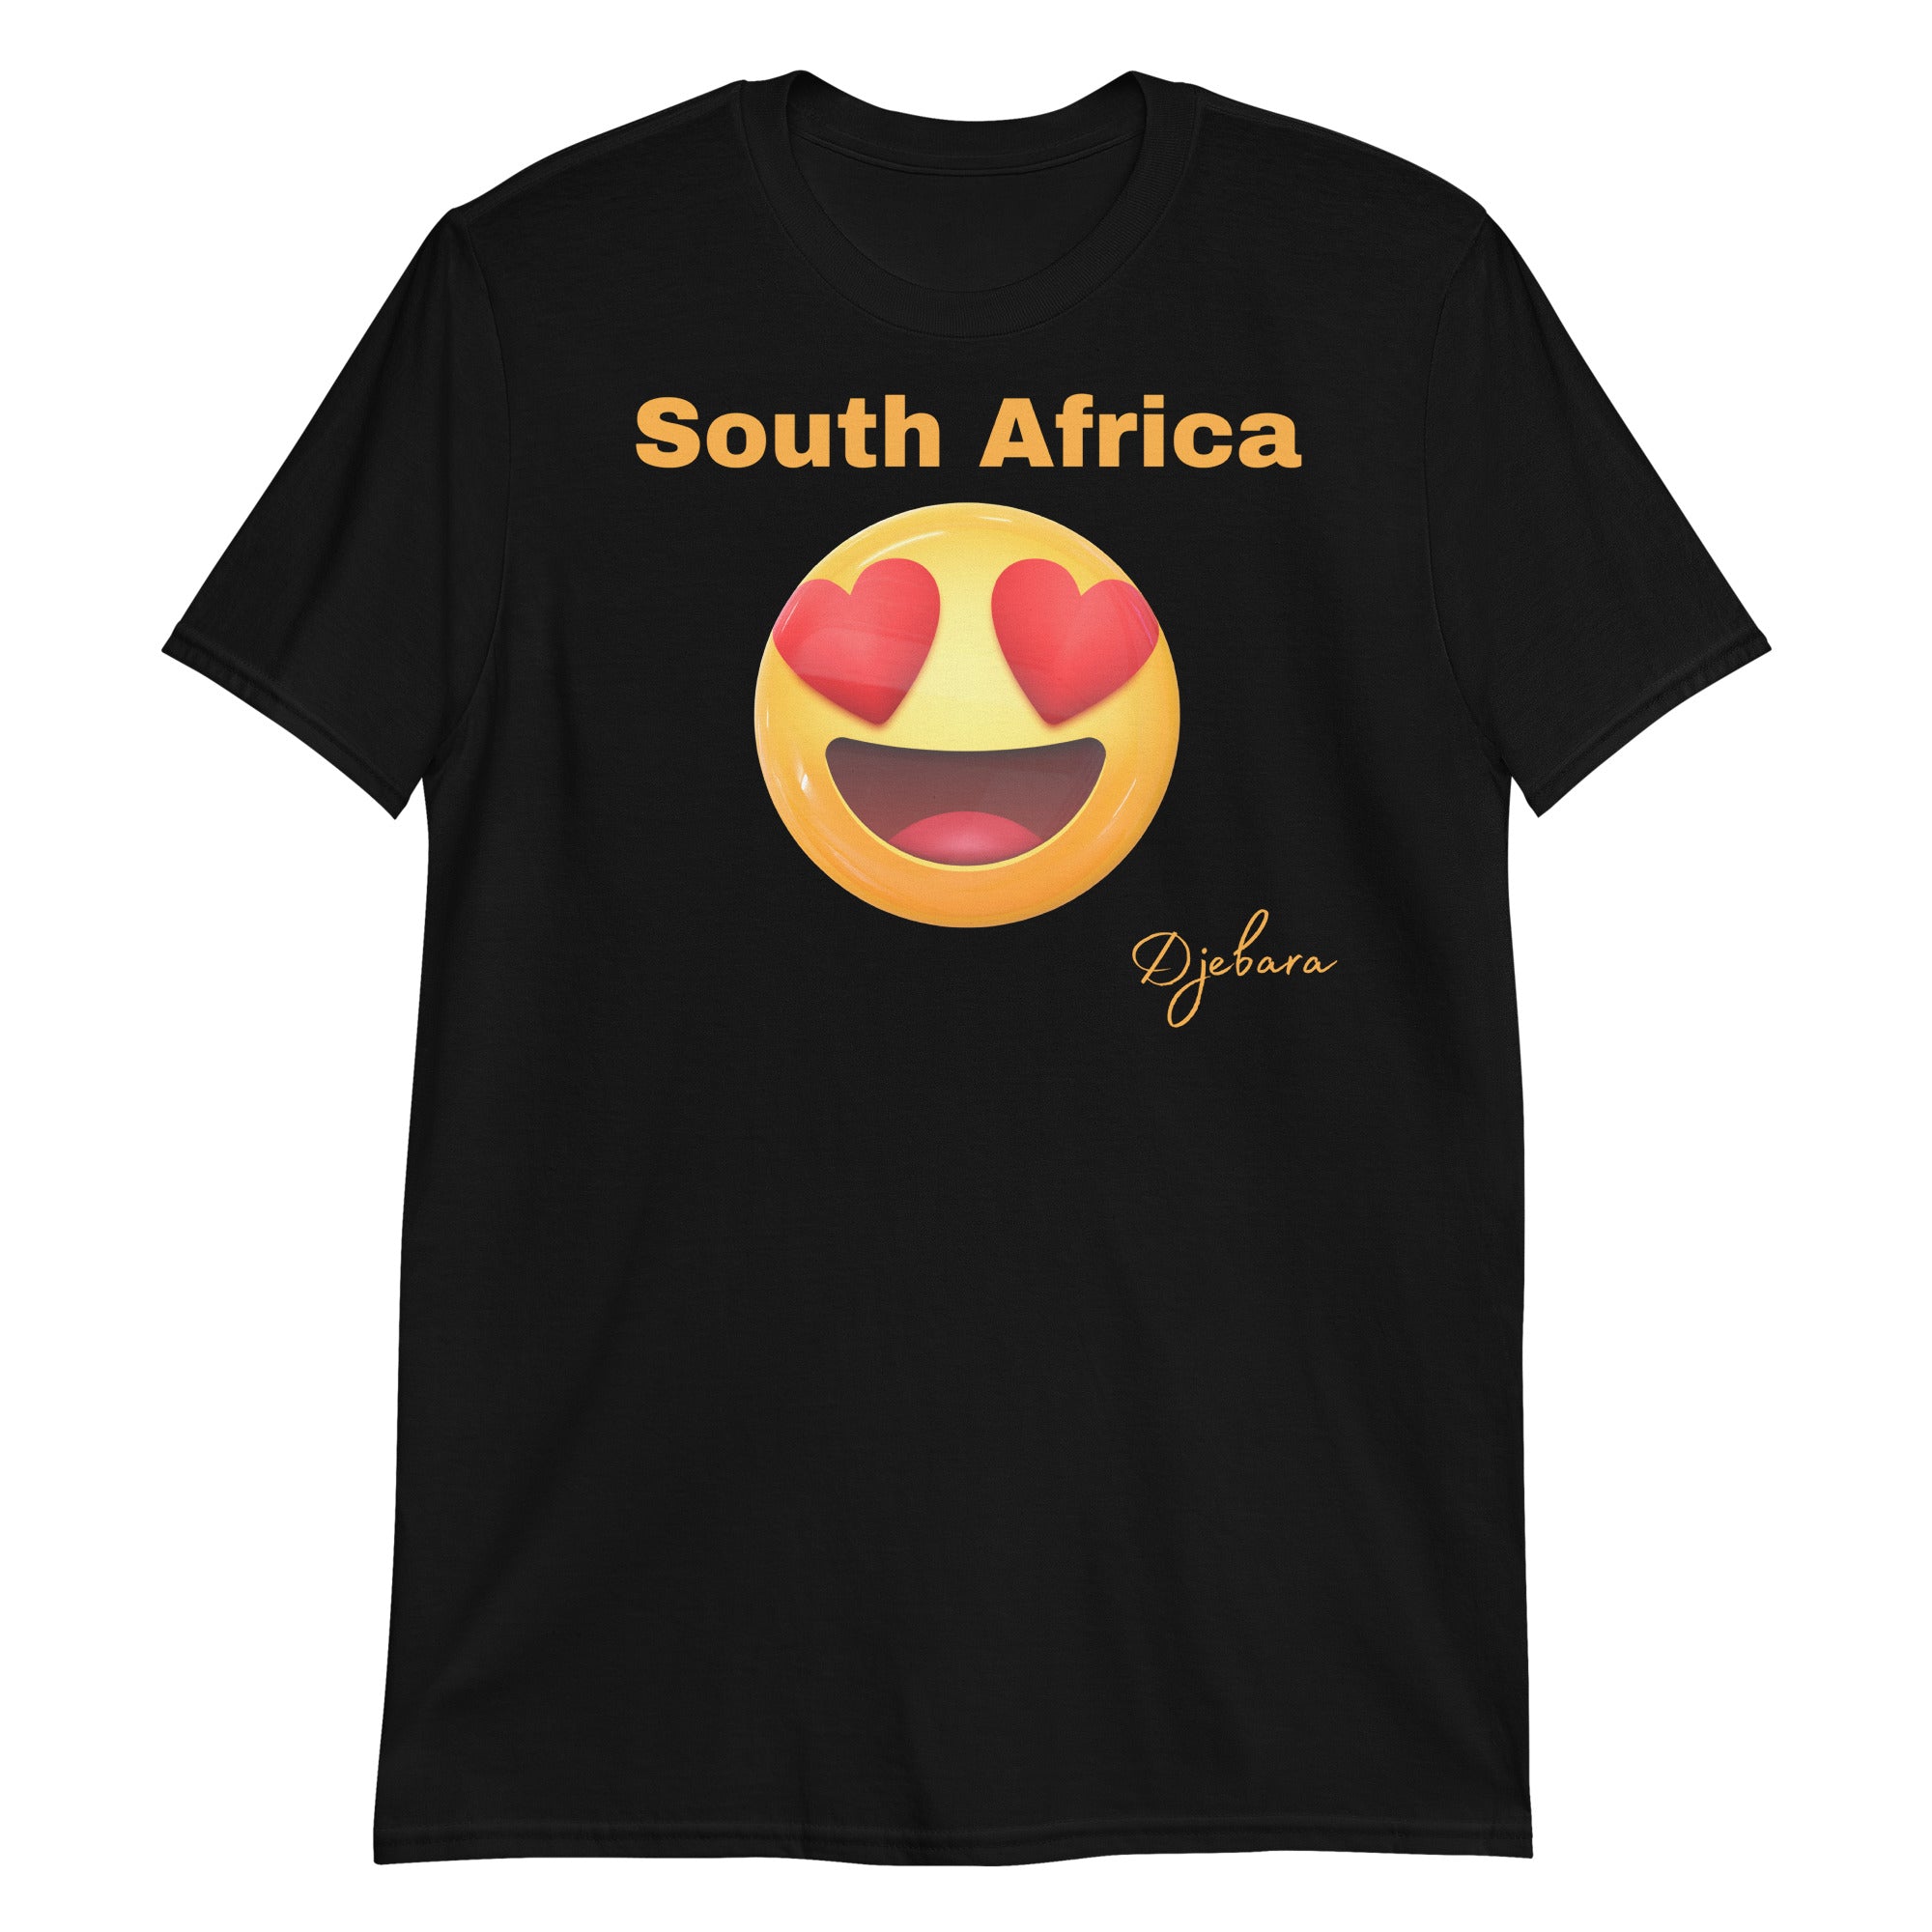 Black South Africa Short-Sleeve Gildan Unisex T-Shirt S-3XL